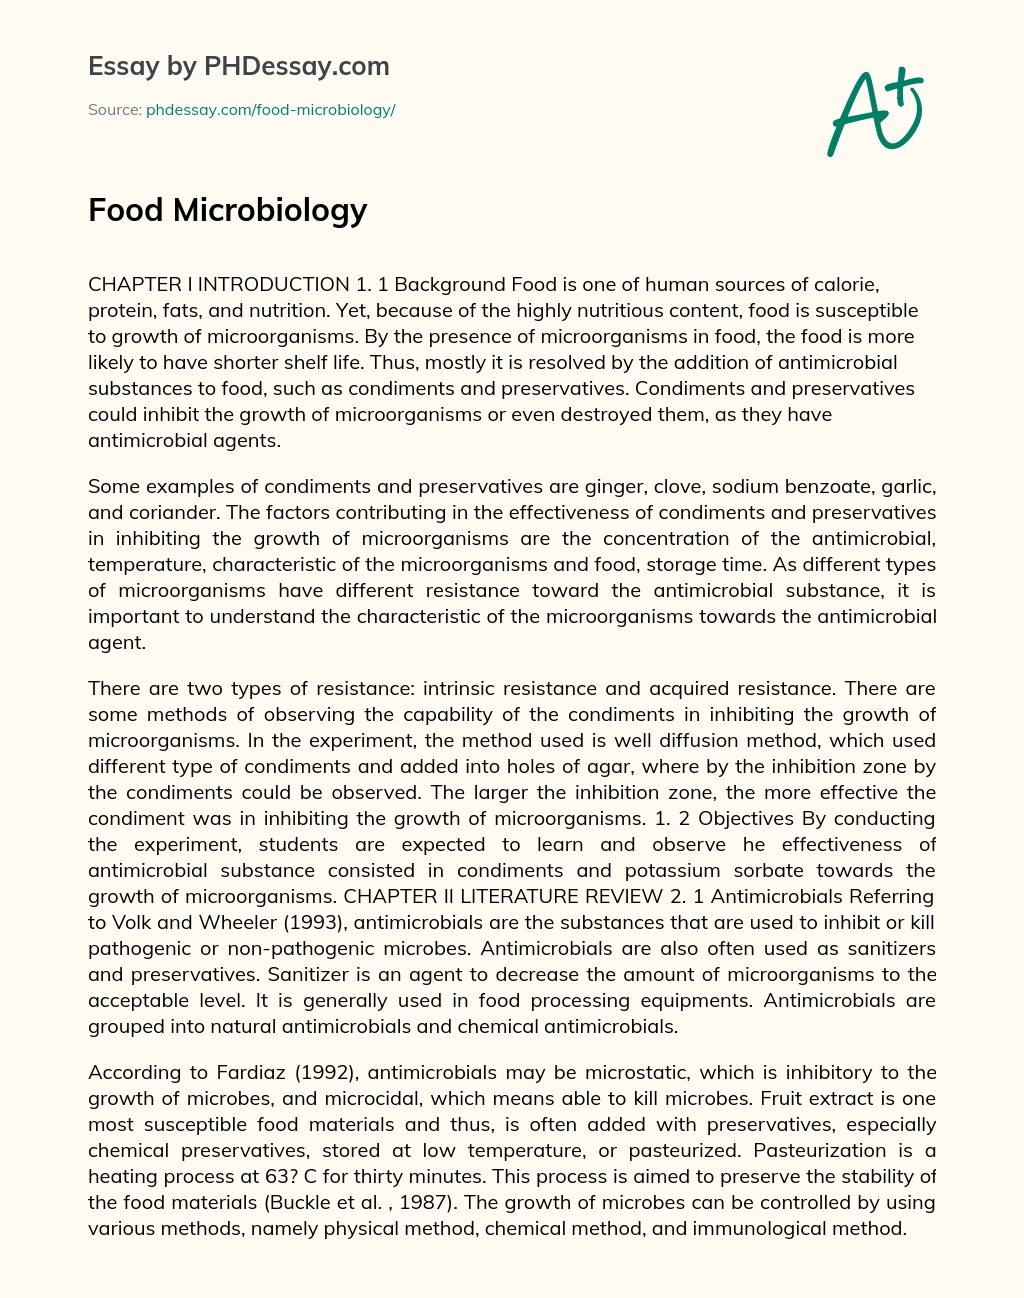 Food Microbiology essay